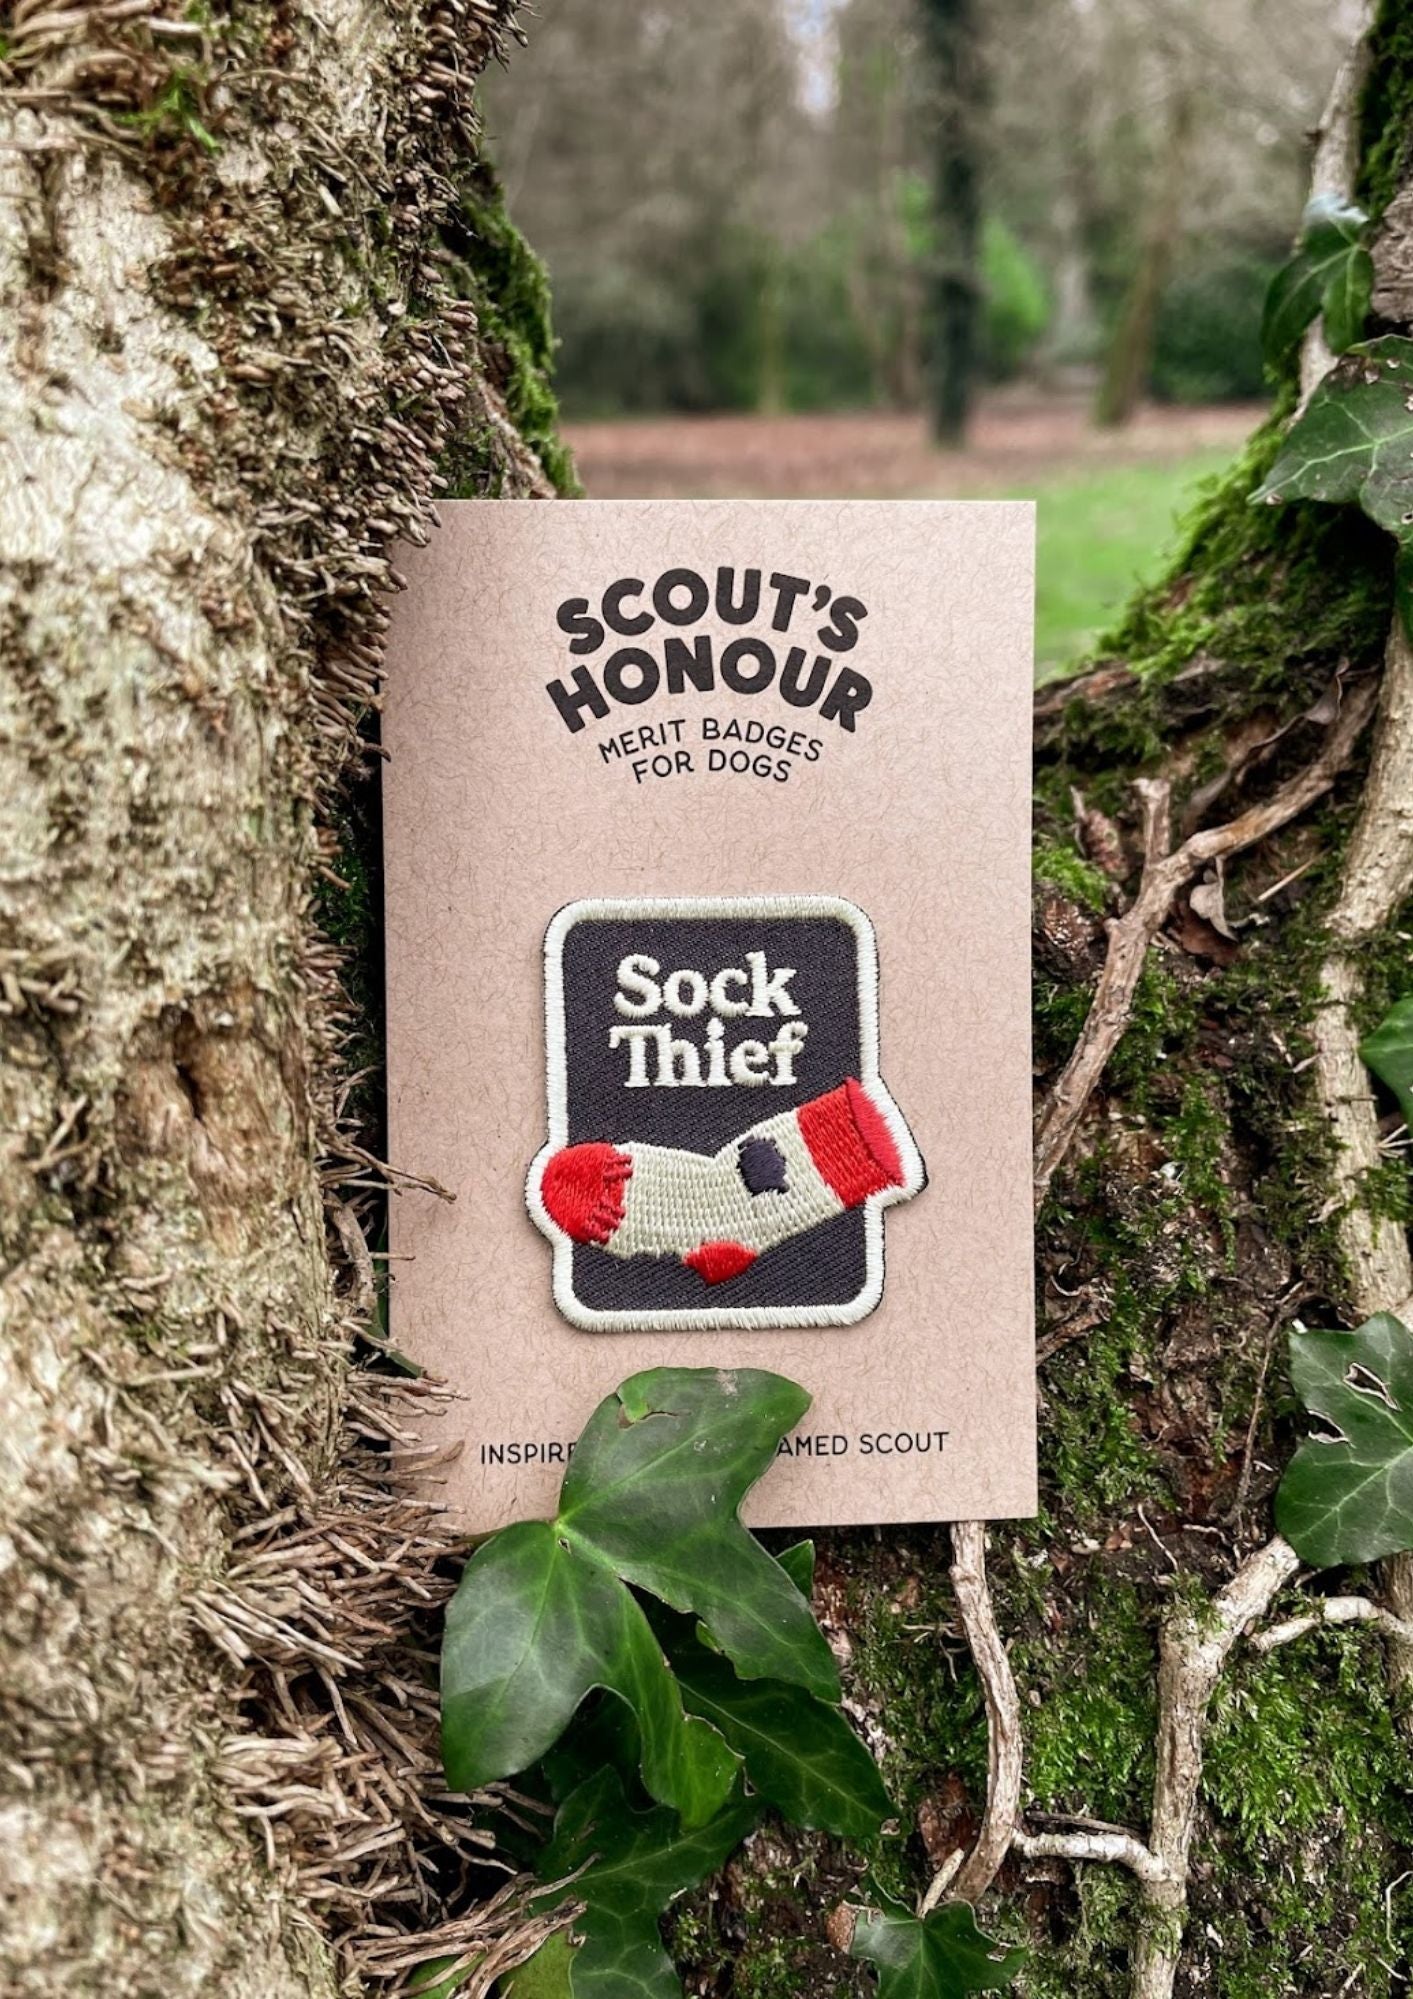 Scout's Honour Sock Thief Patch